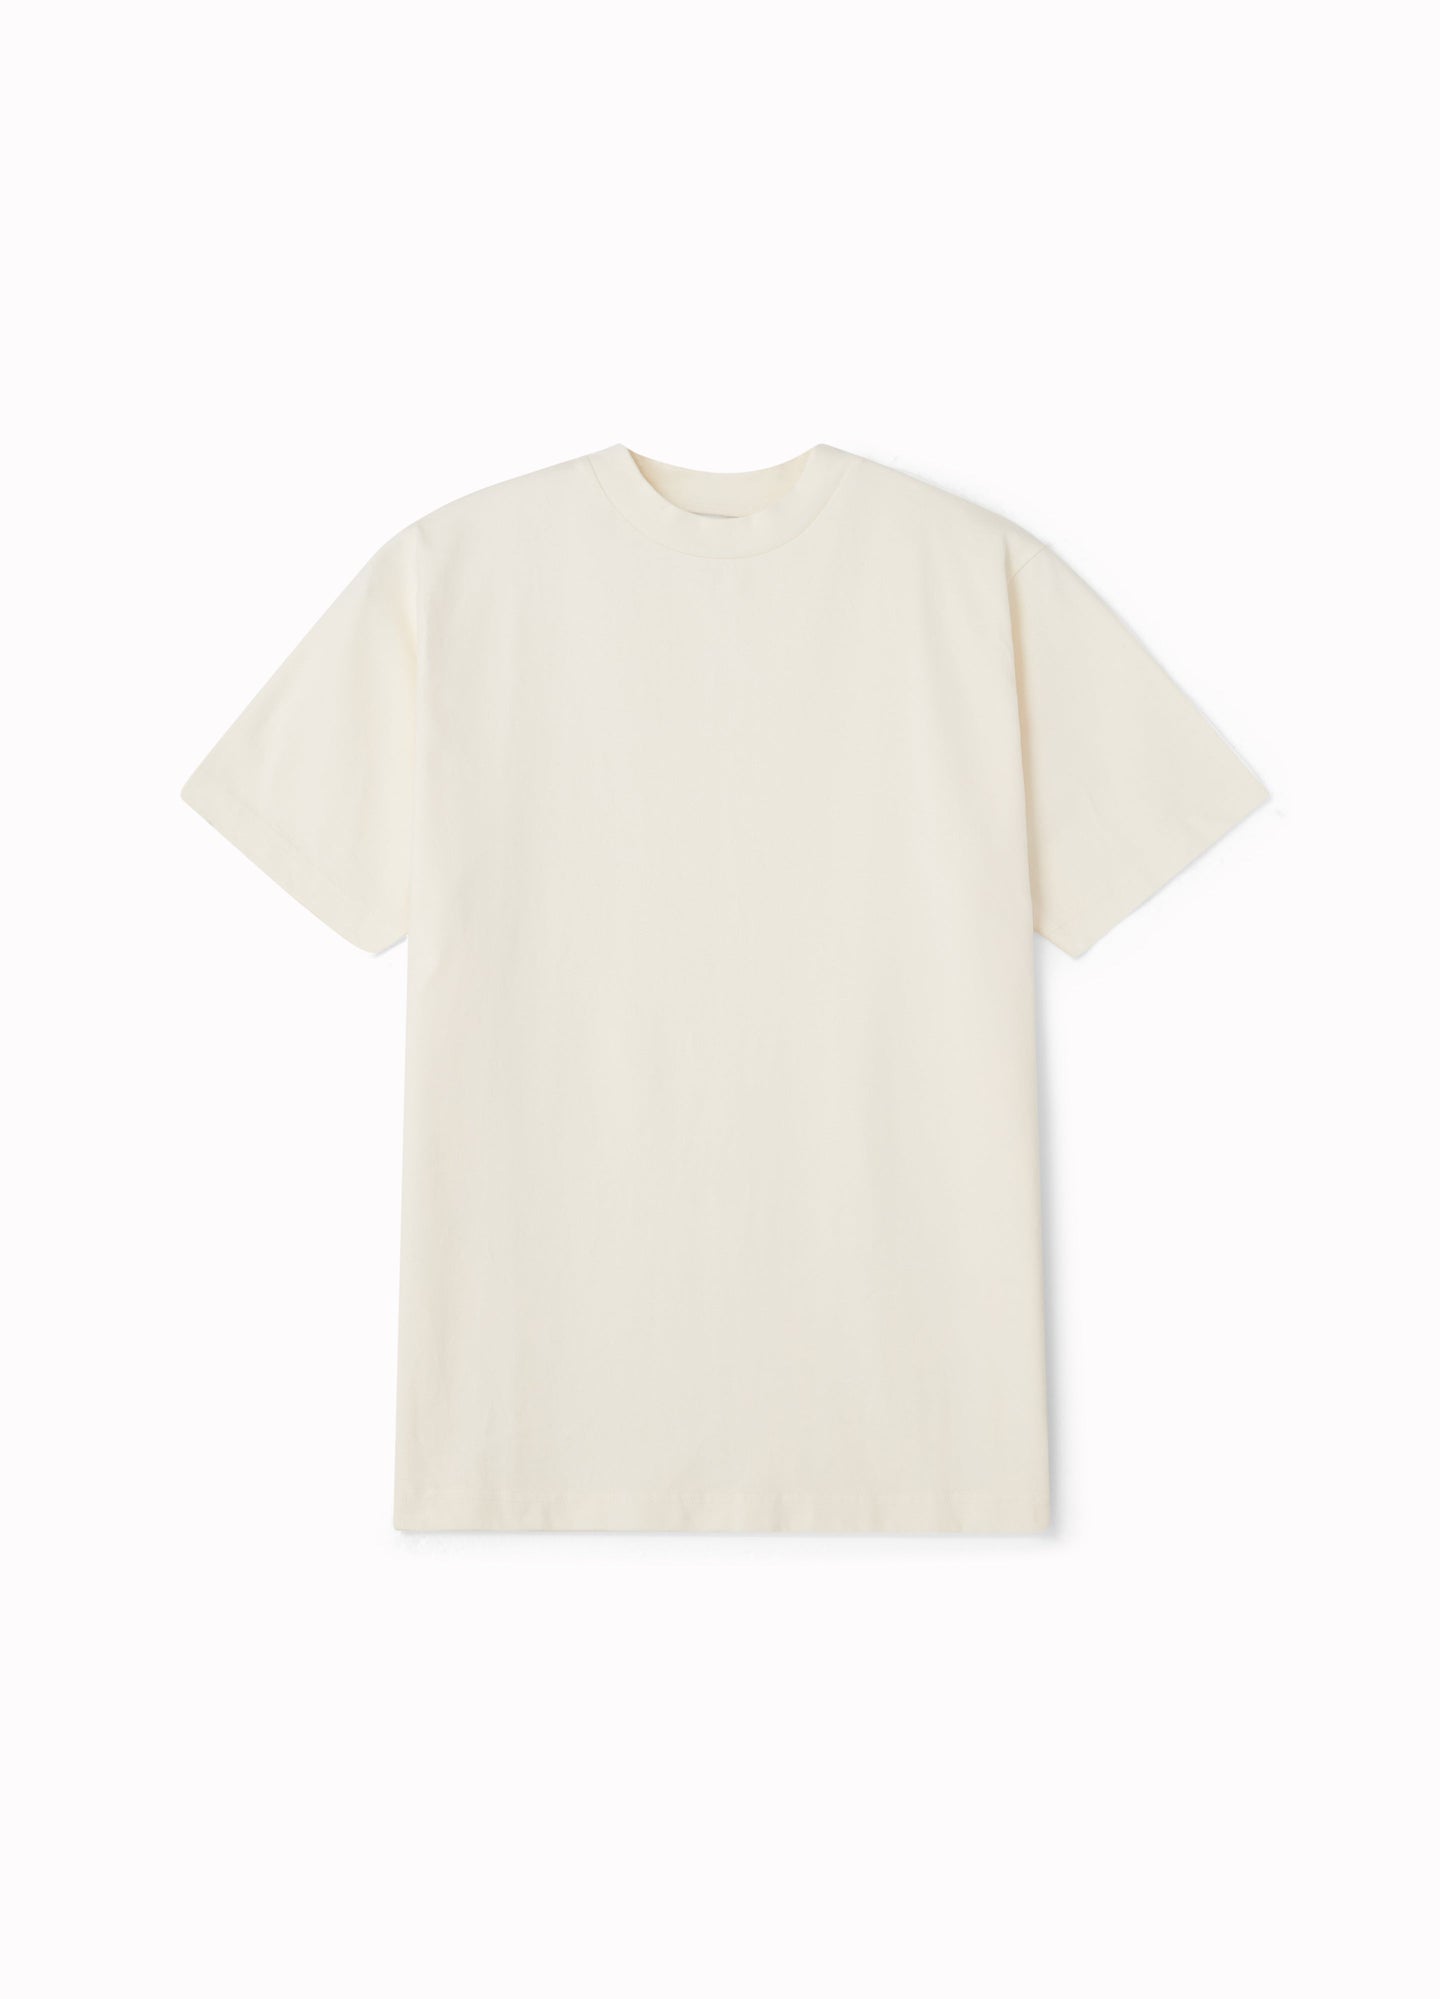 Tony T-Shirt - Off White Berg & Berg